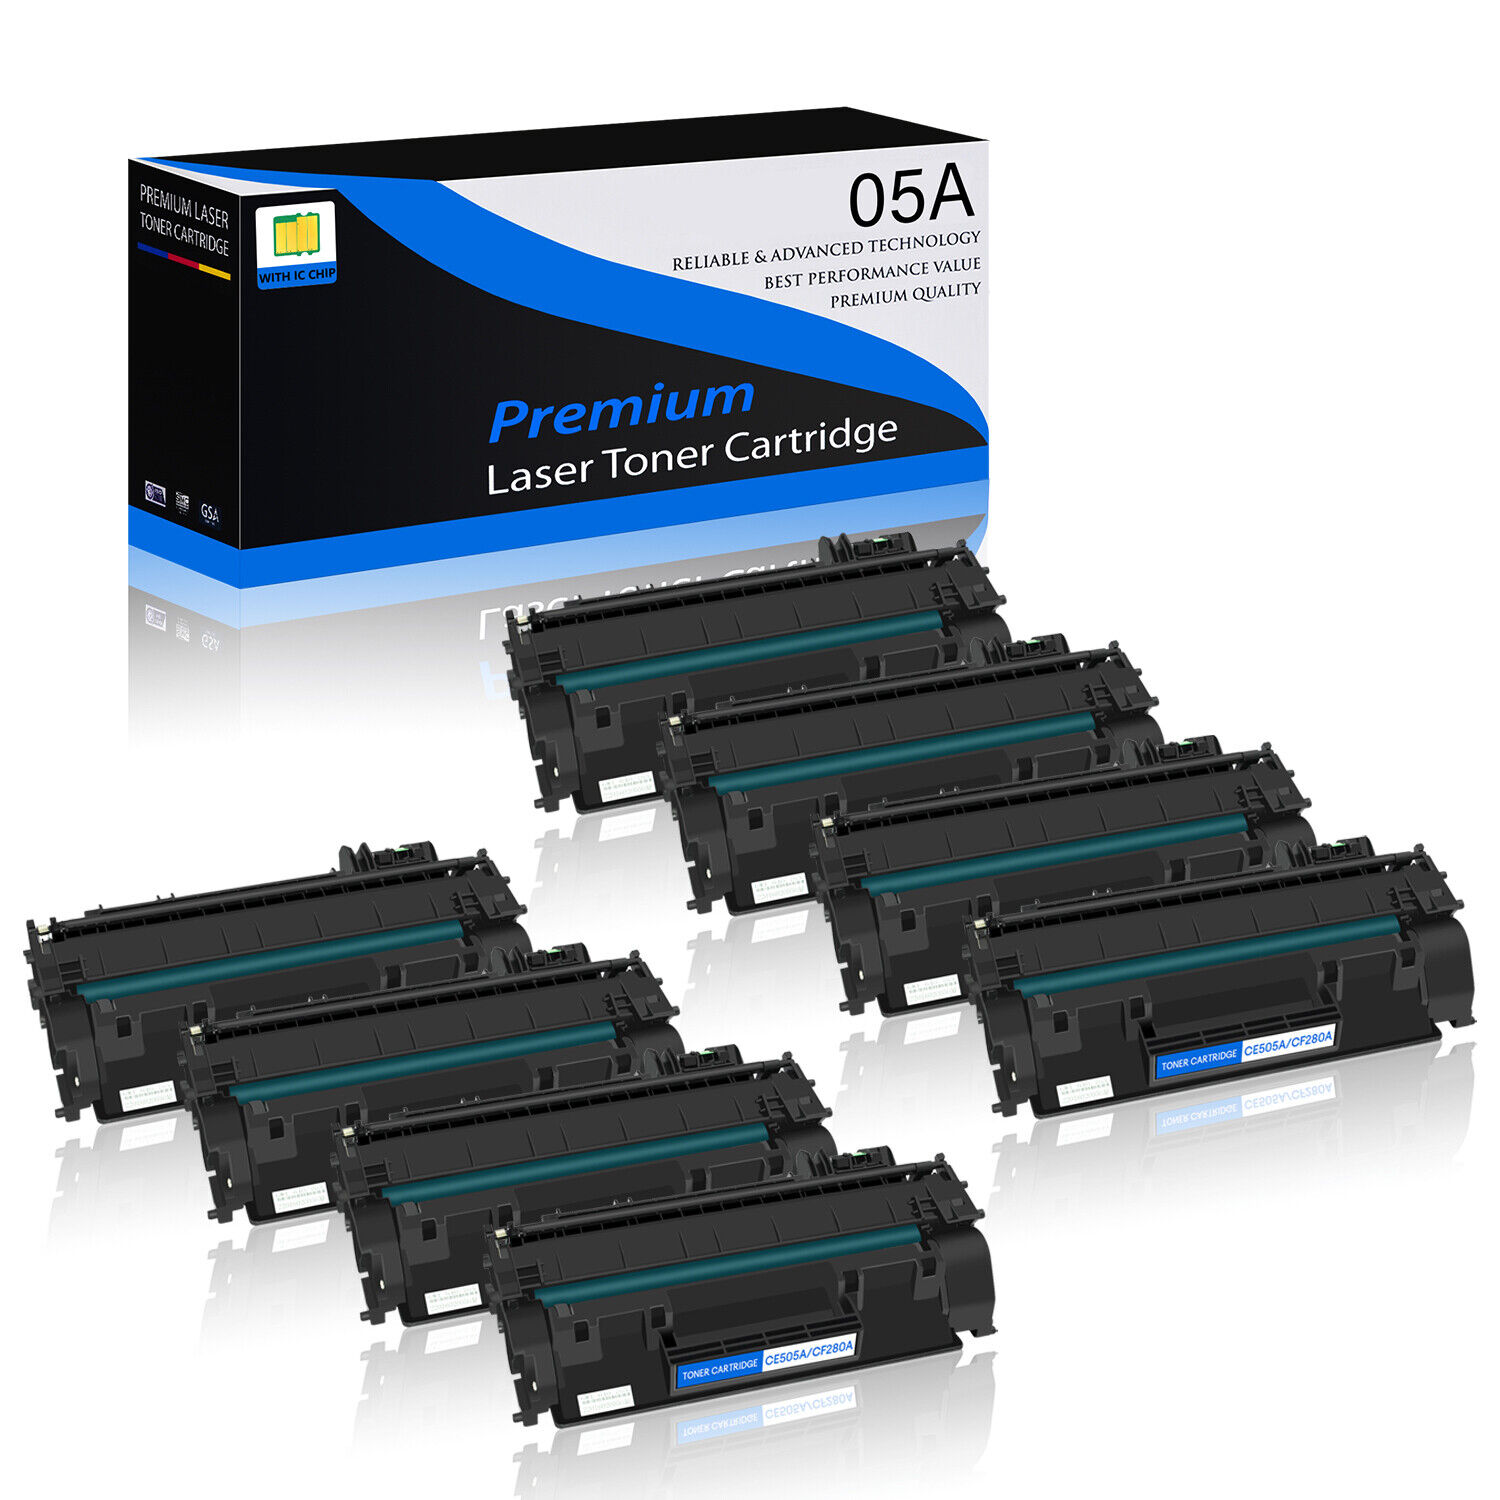 8PK CE505A 05A Toner Cartridge for HP LaserJet P2050 P2055 P2055d P2035n P2055dn